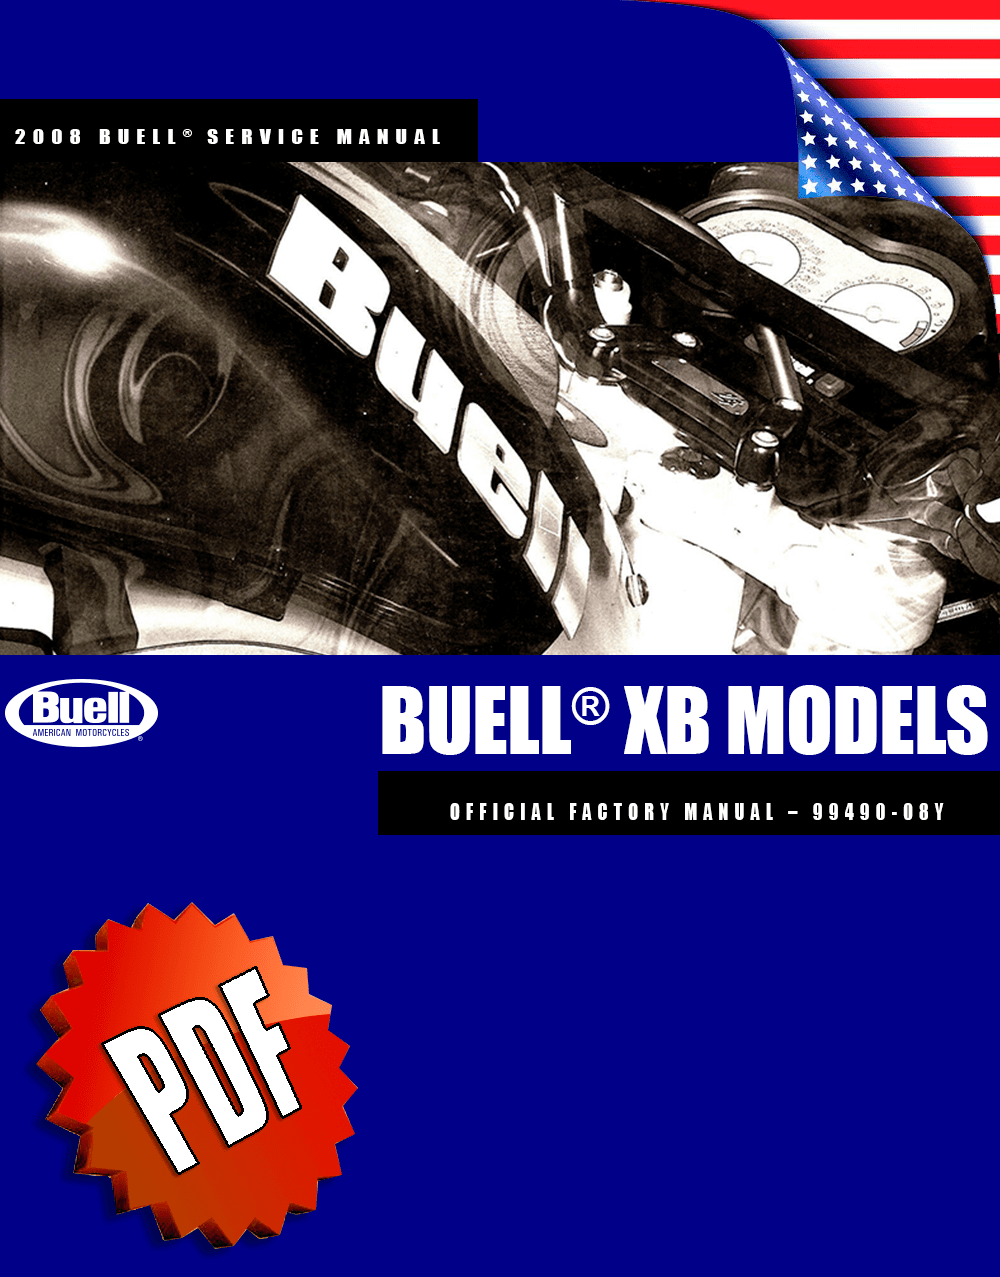 Buell XB 2008